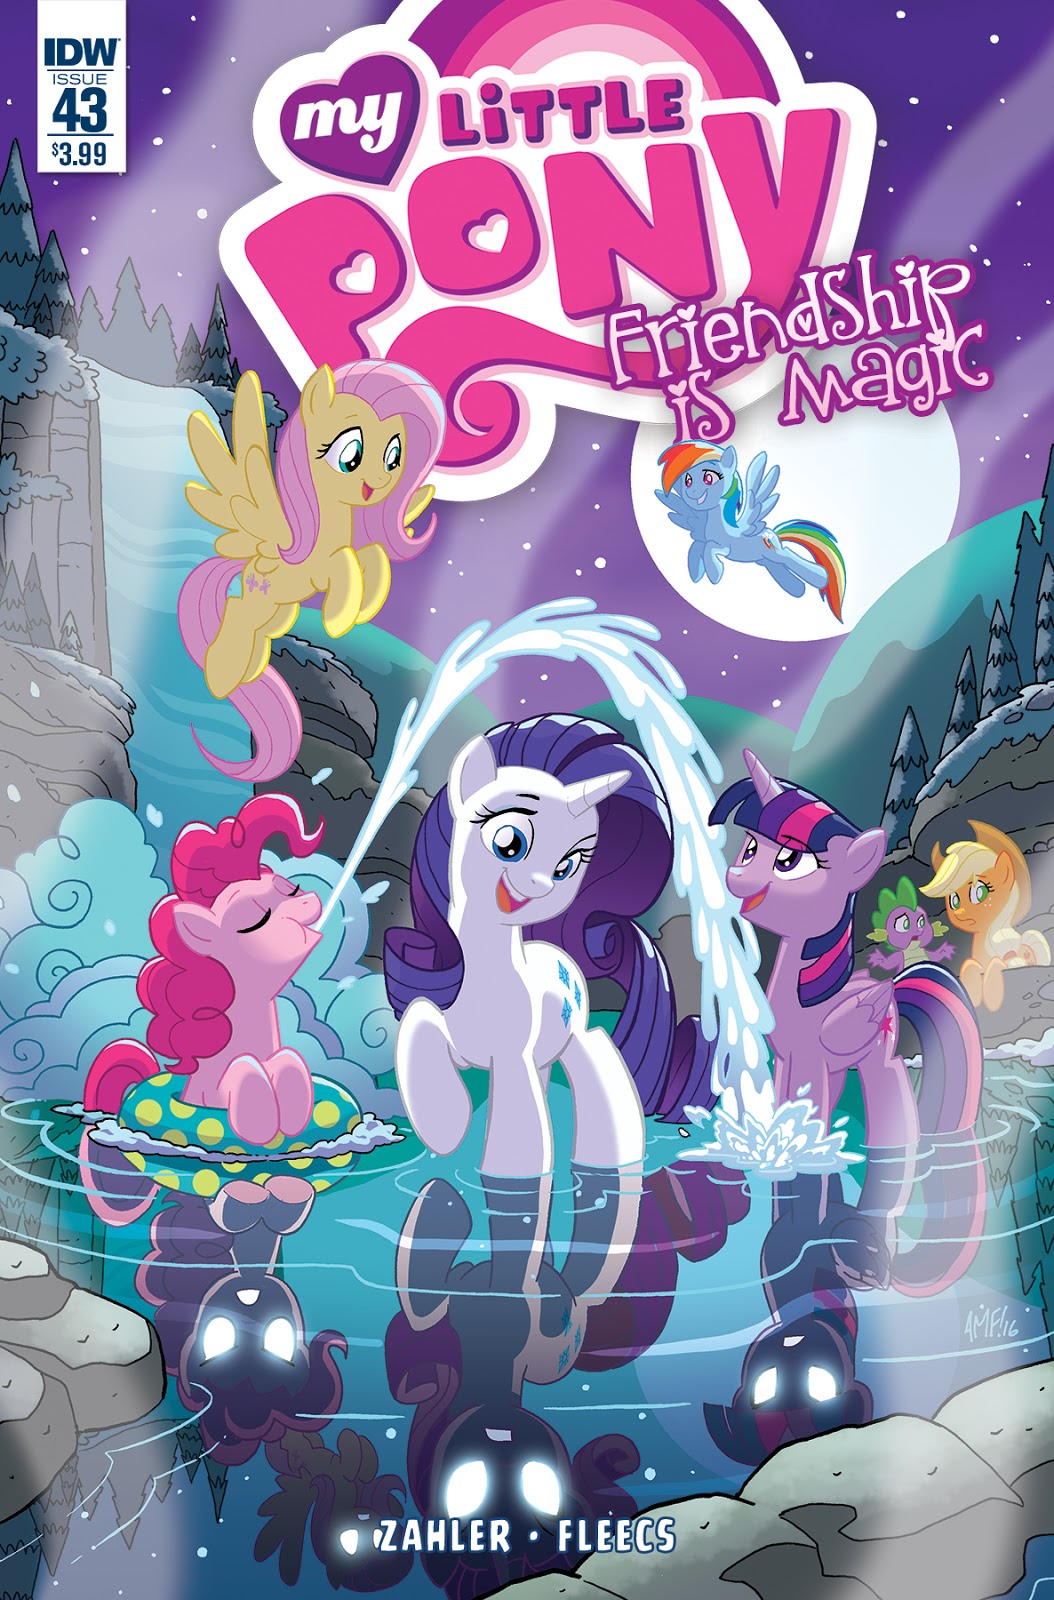 My Little Pony: Friendship Is Magic (TV Series 2010- ) - IMDb